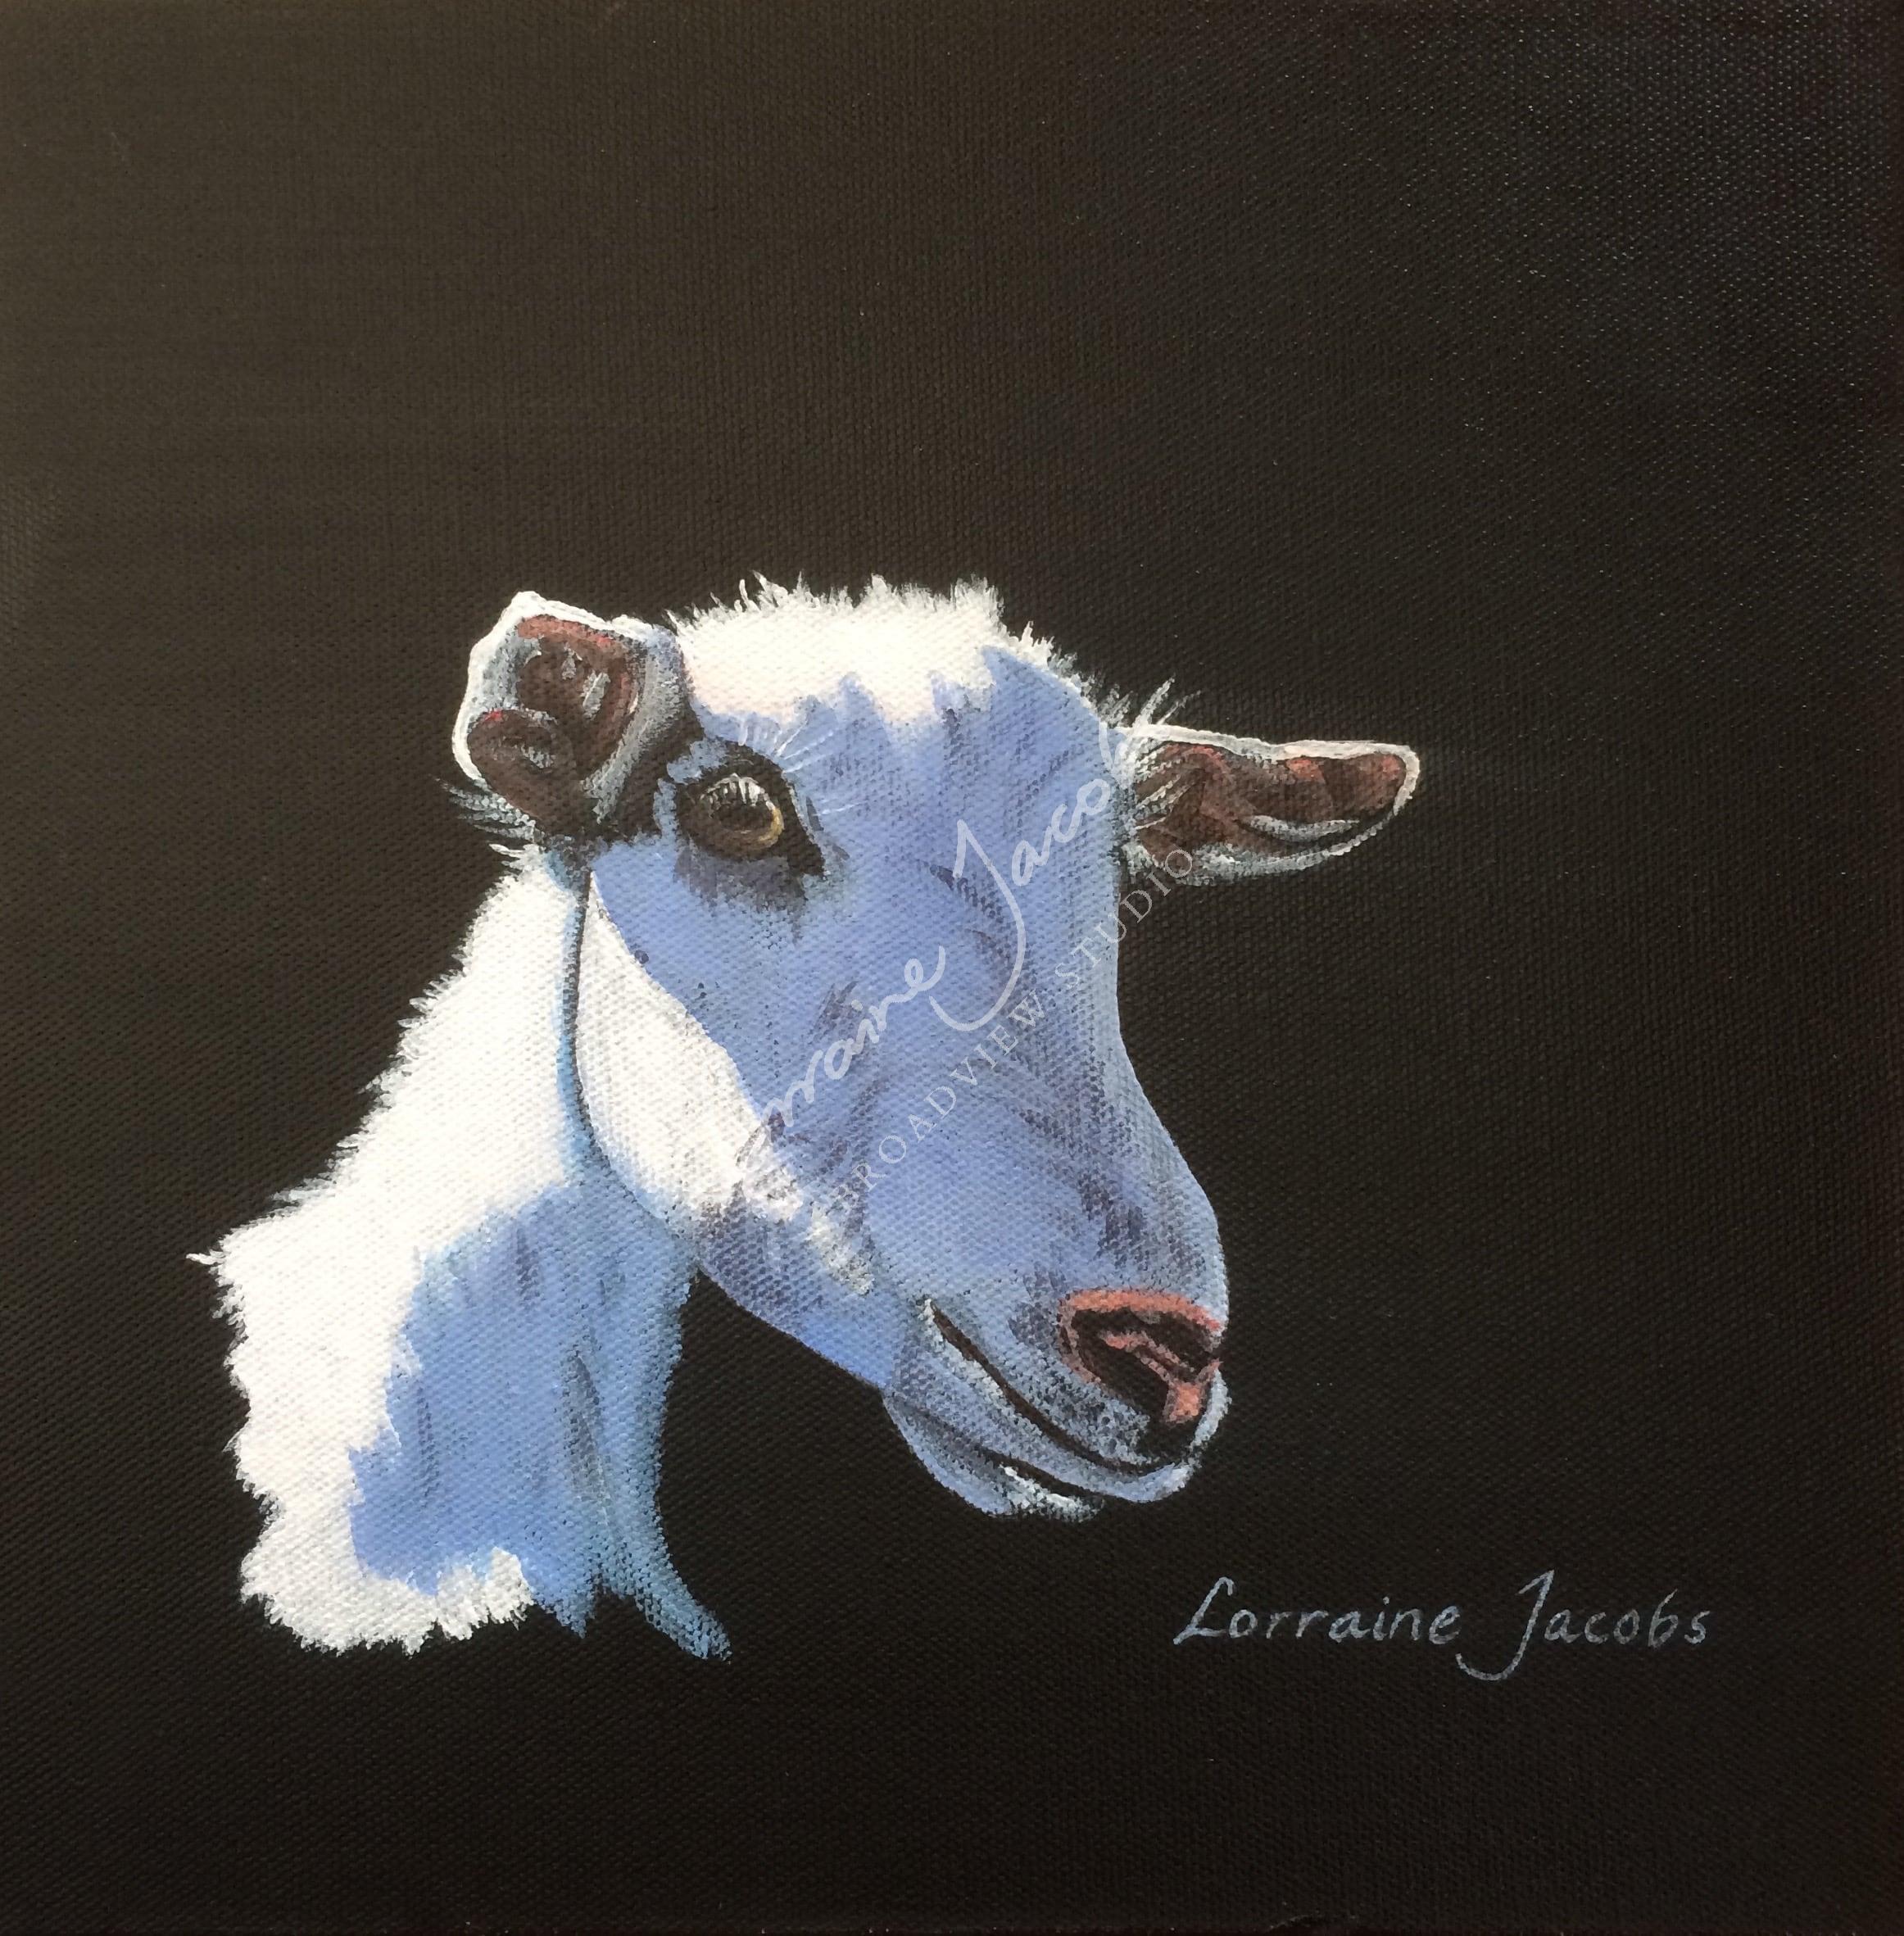 1 Goat – Lorraine Jacobs